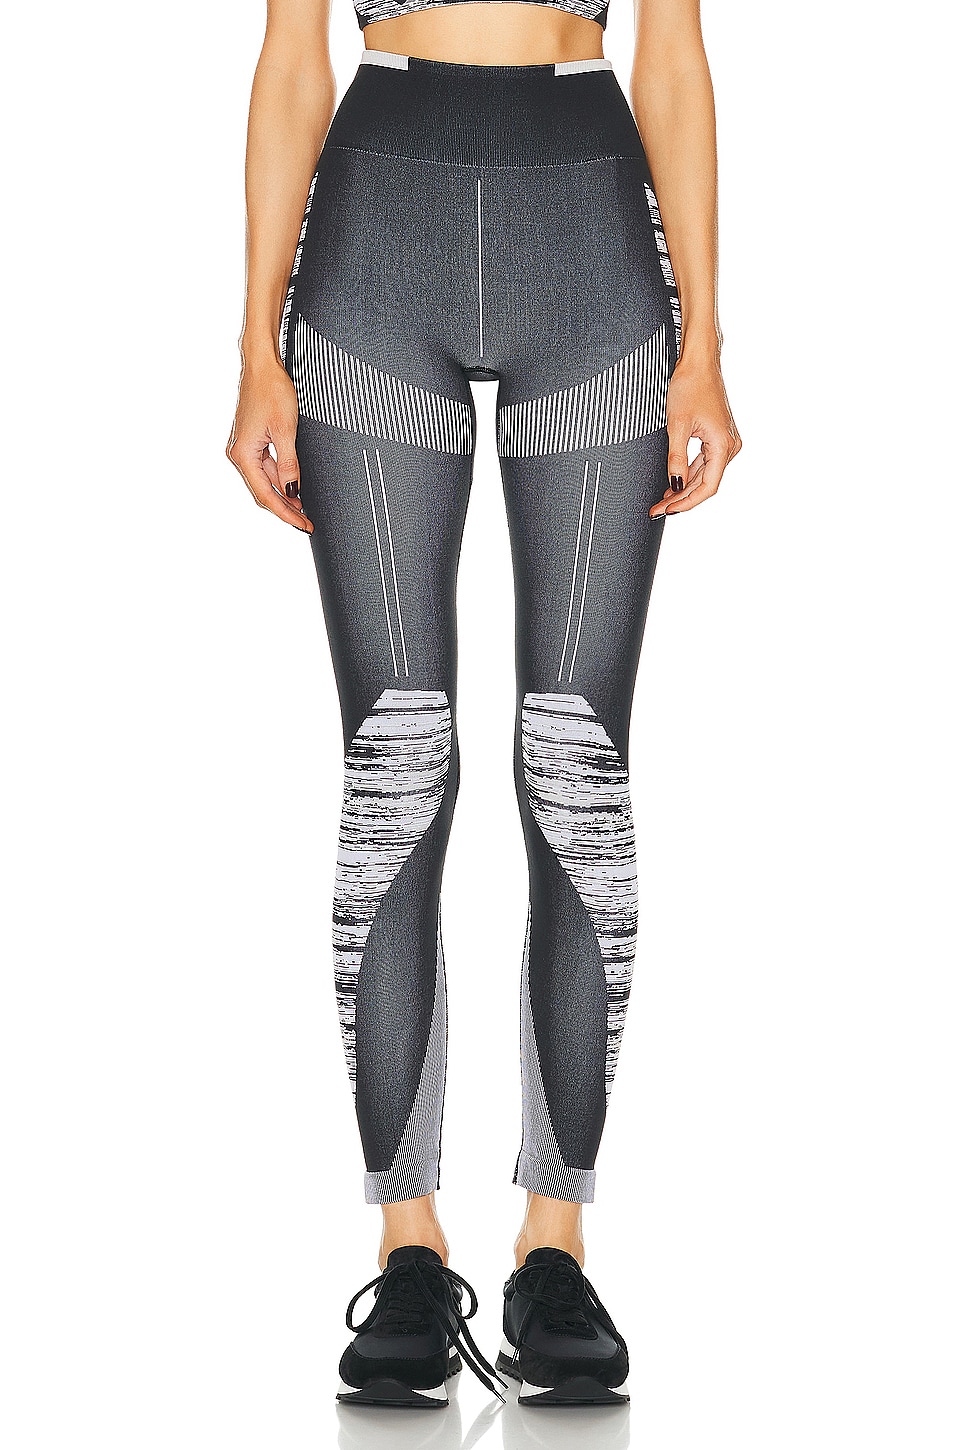 Image 1 of adidas by Stella McCartney True Strength Seamless Yoga Legging in Black, White, & Chalk Pearl